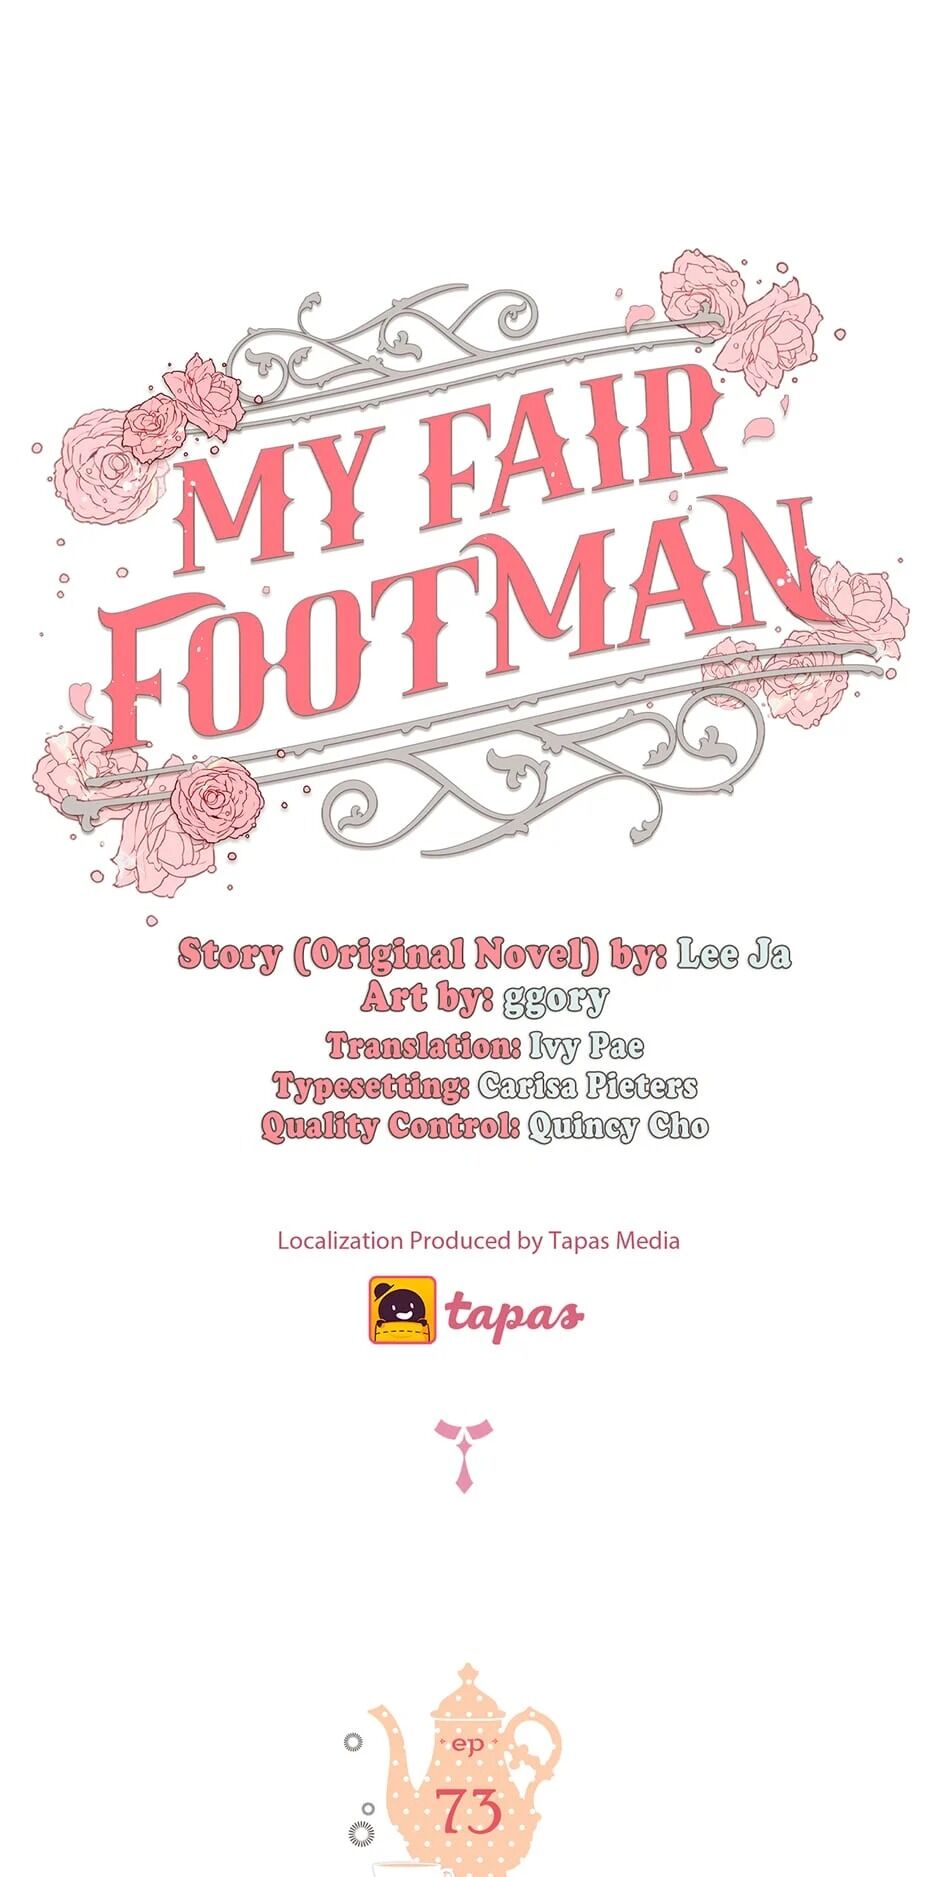 My Fair Footman - Page 1